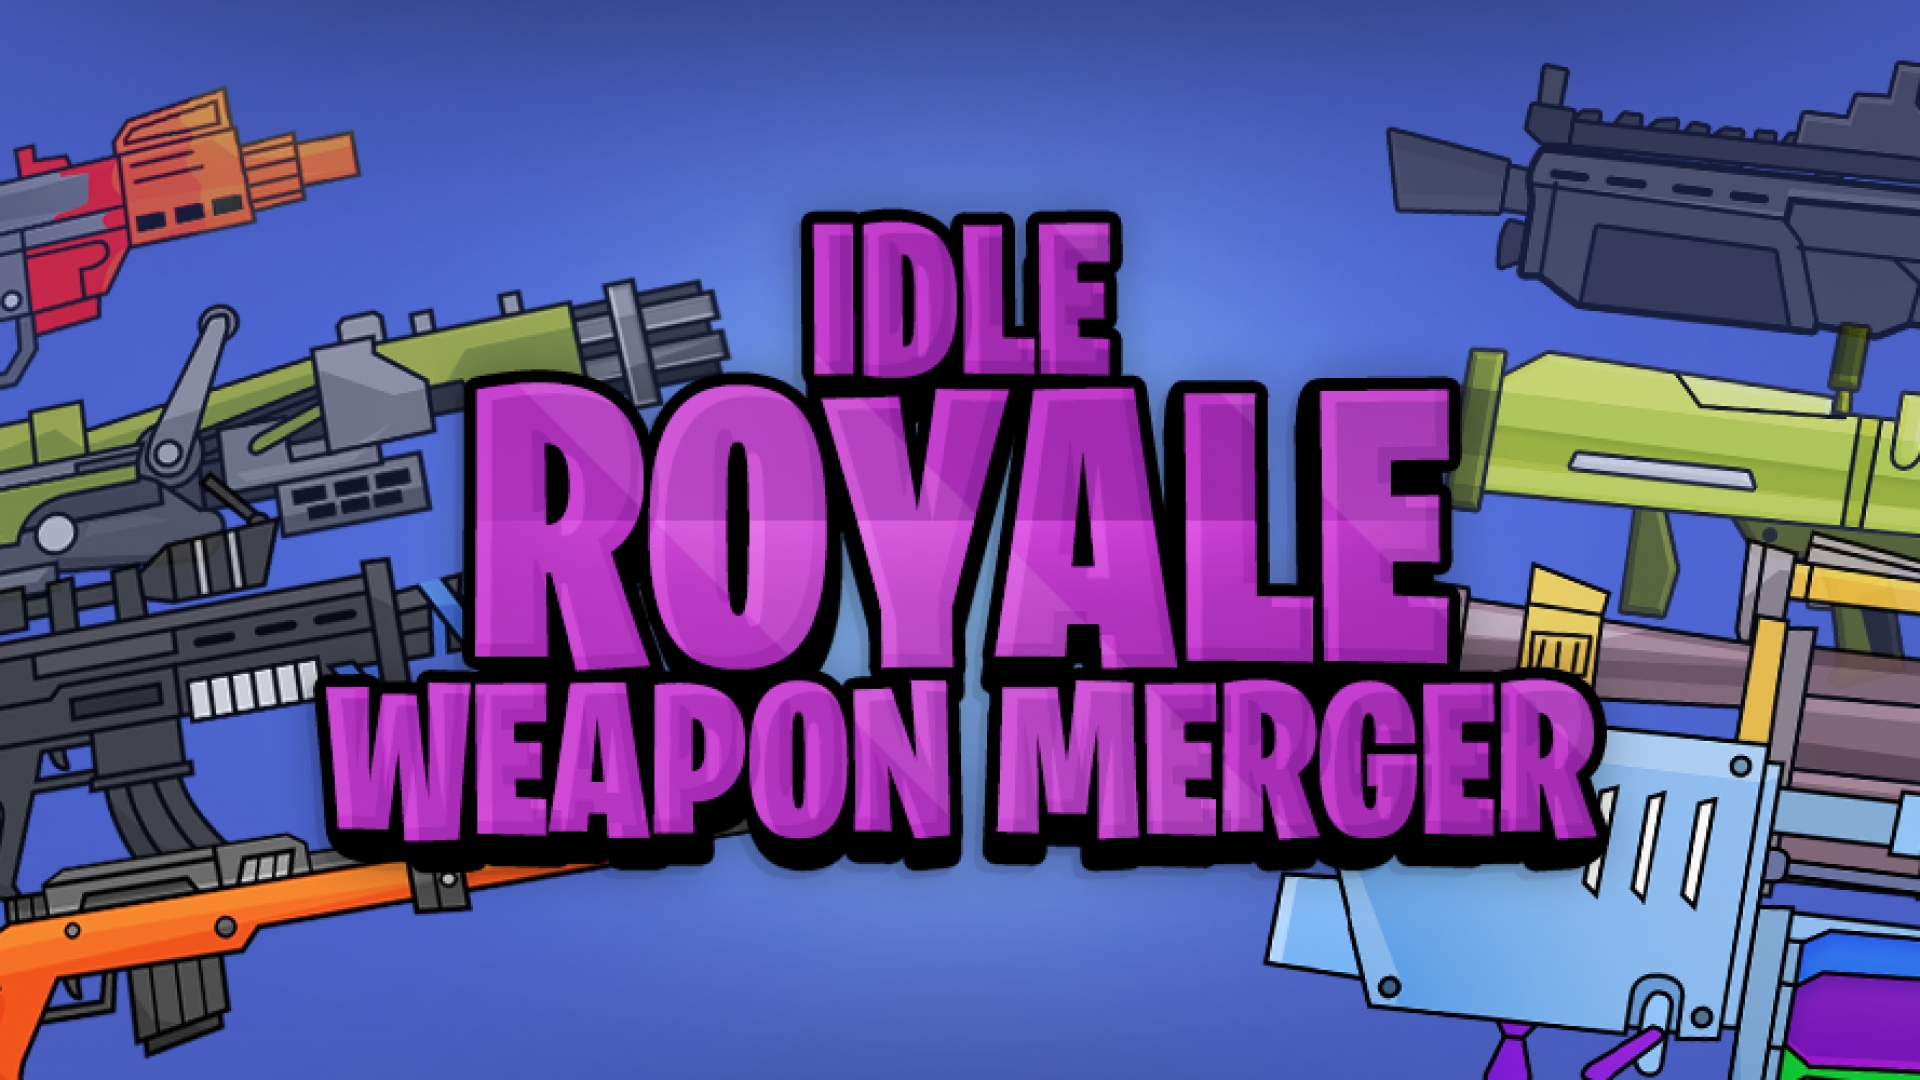 Idle Royale Weapon Merger thumbnail image